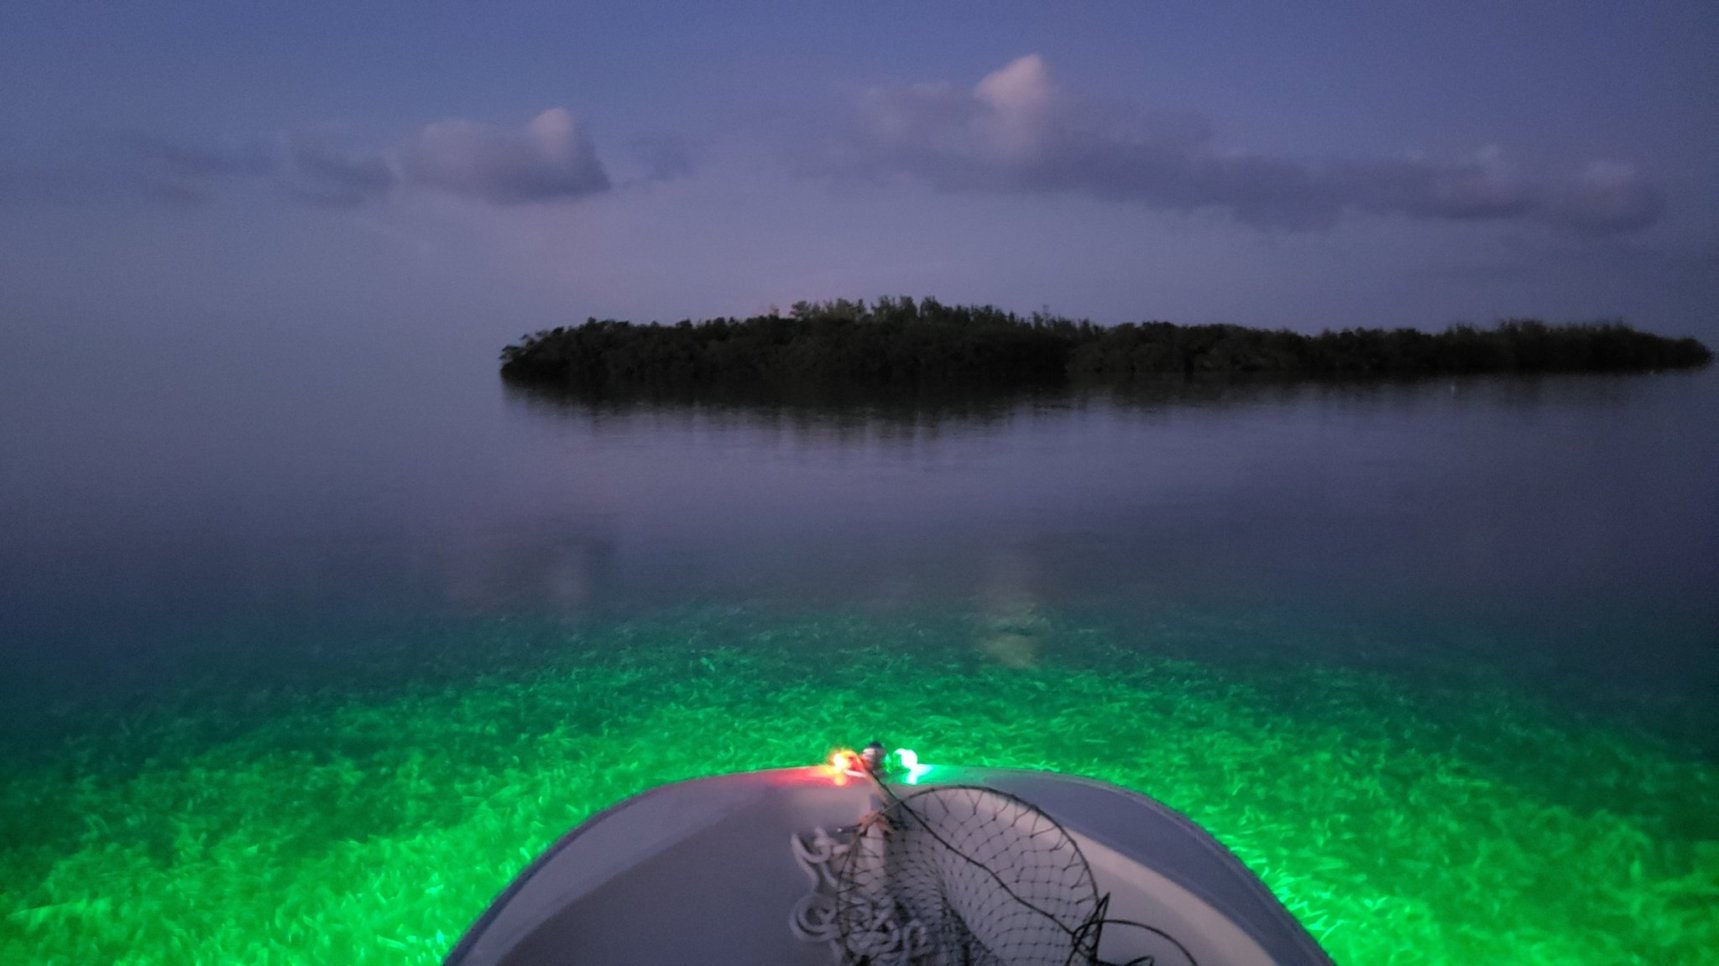 LED Underwater Fishing Light Green Blob Outdoors, Boat & Dock